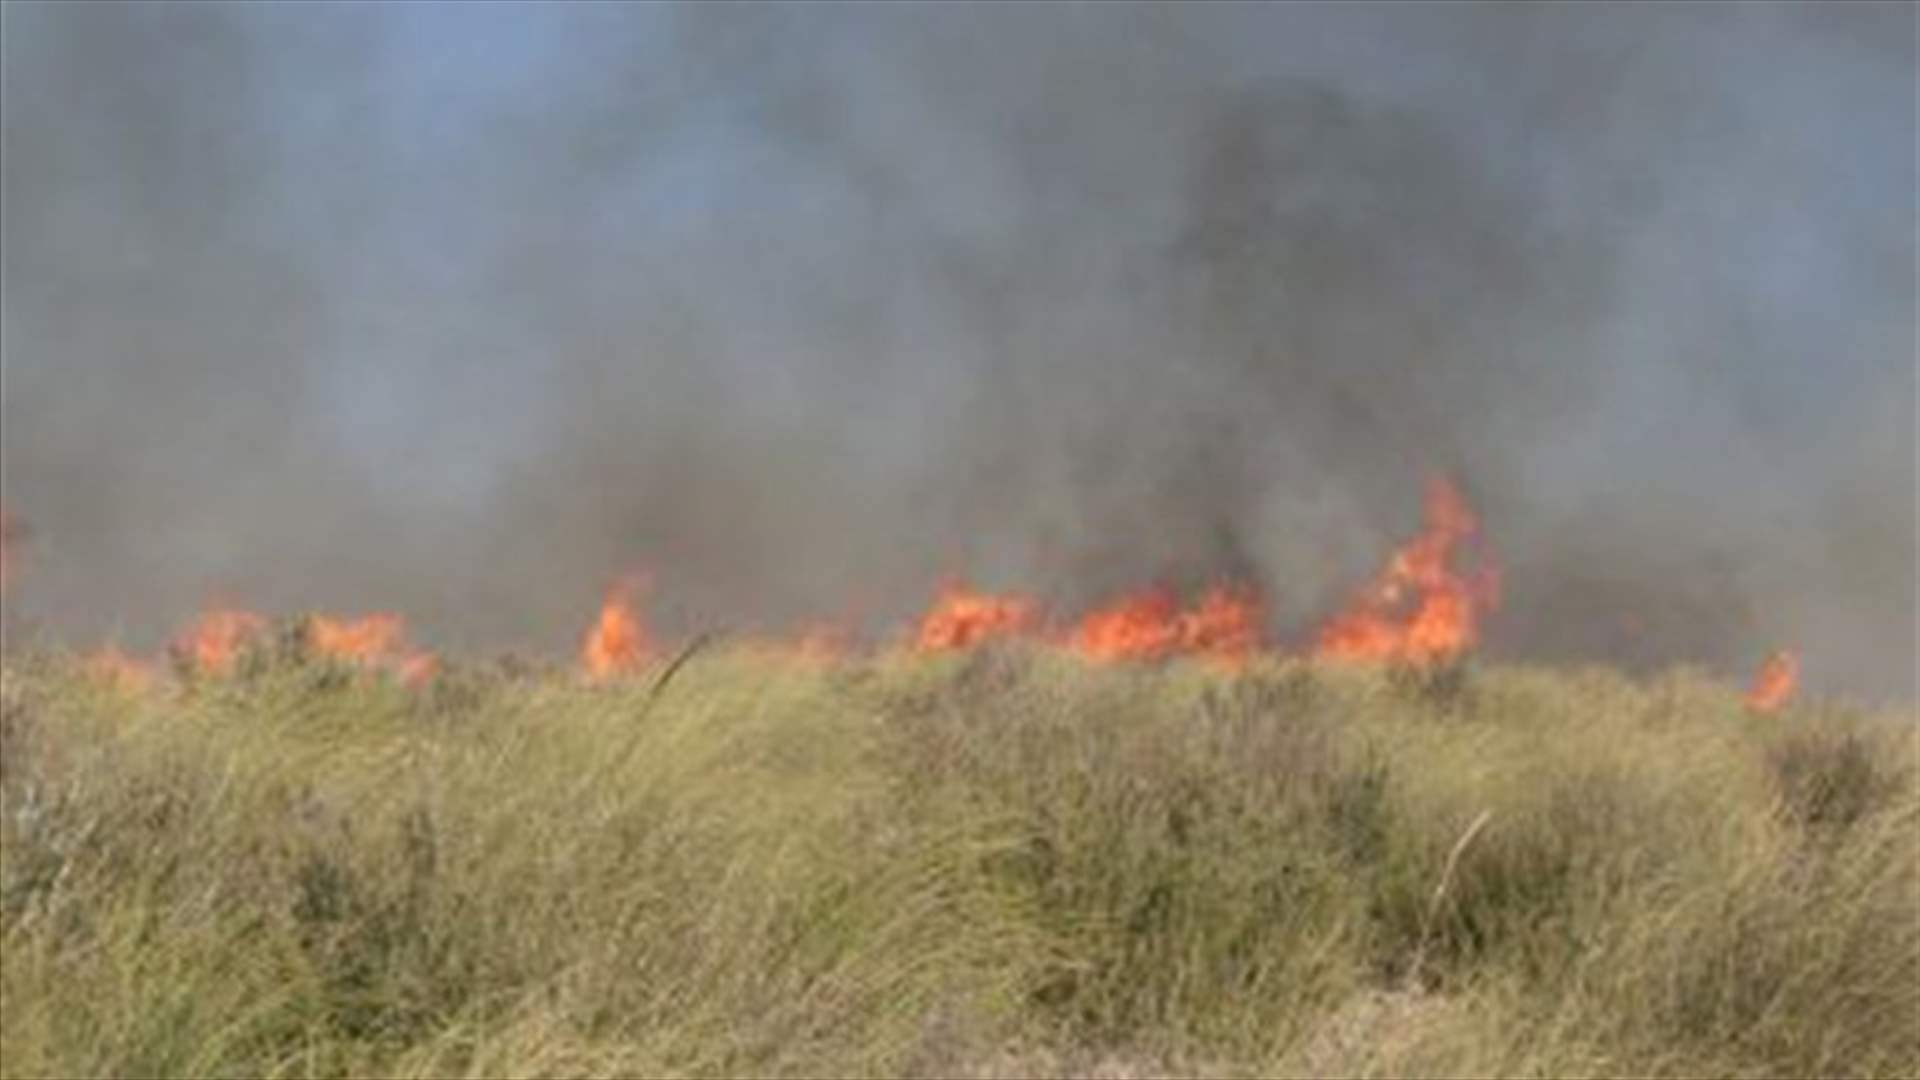 NNA: Fire erupts between Aanqoun and Kfarhatta